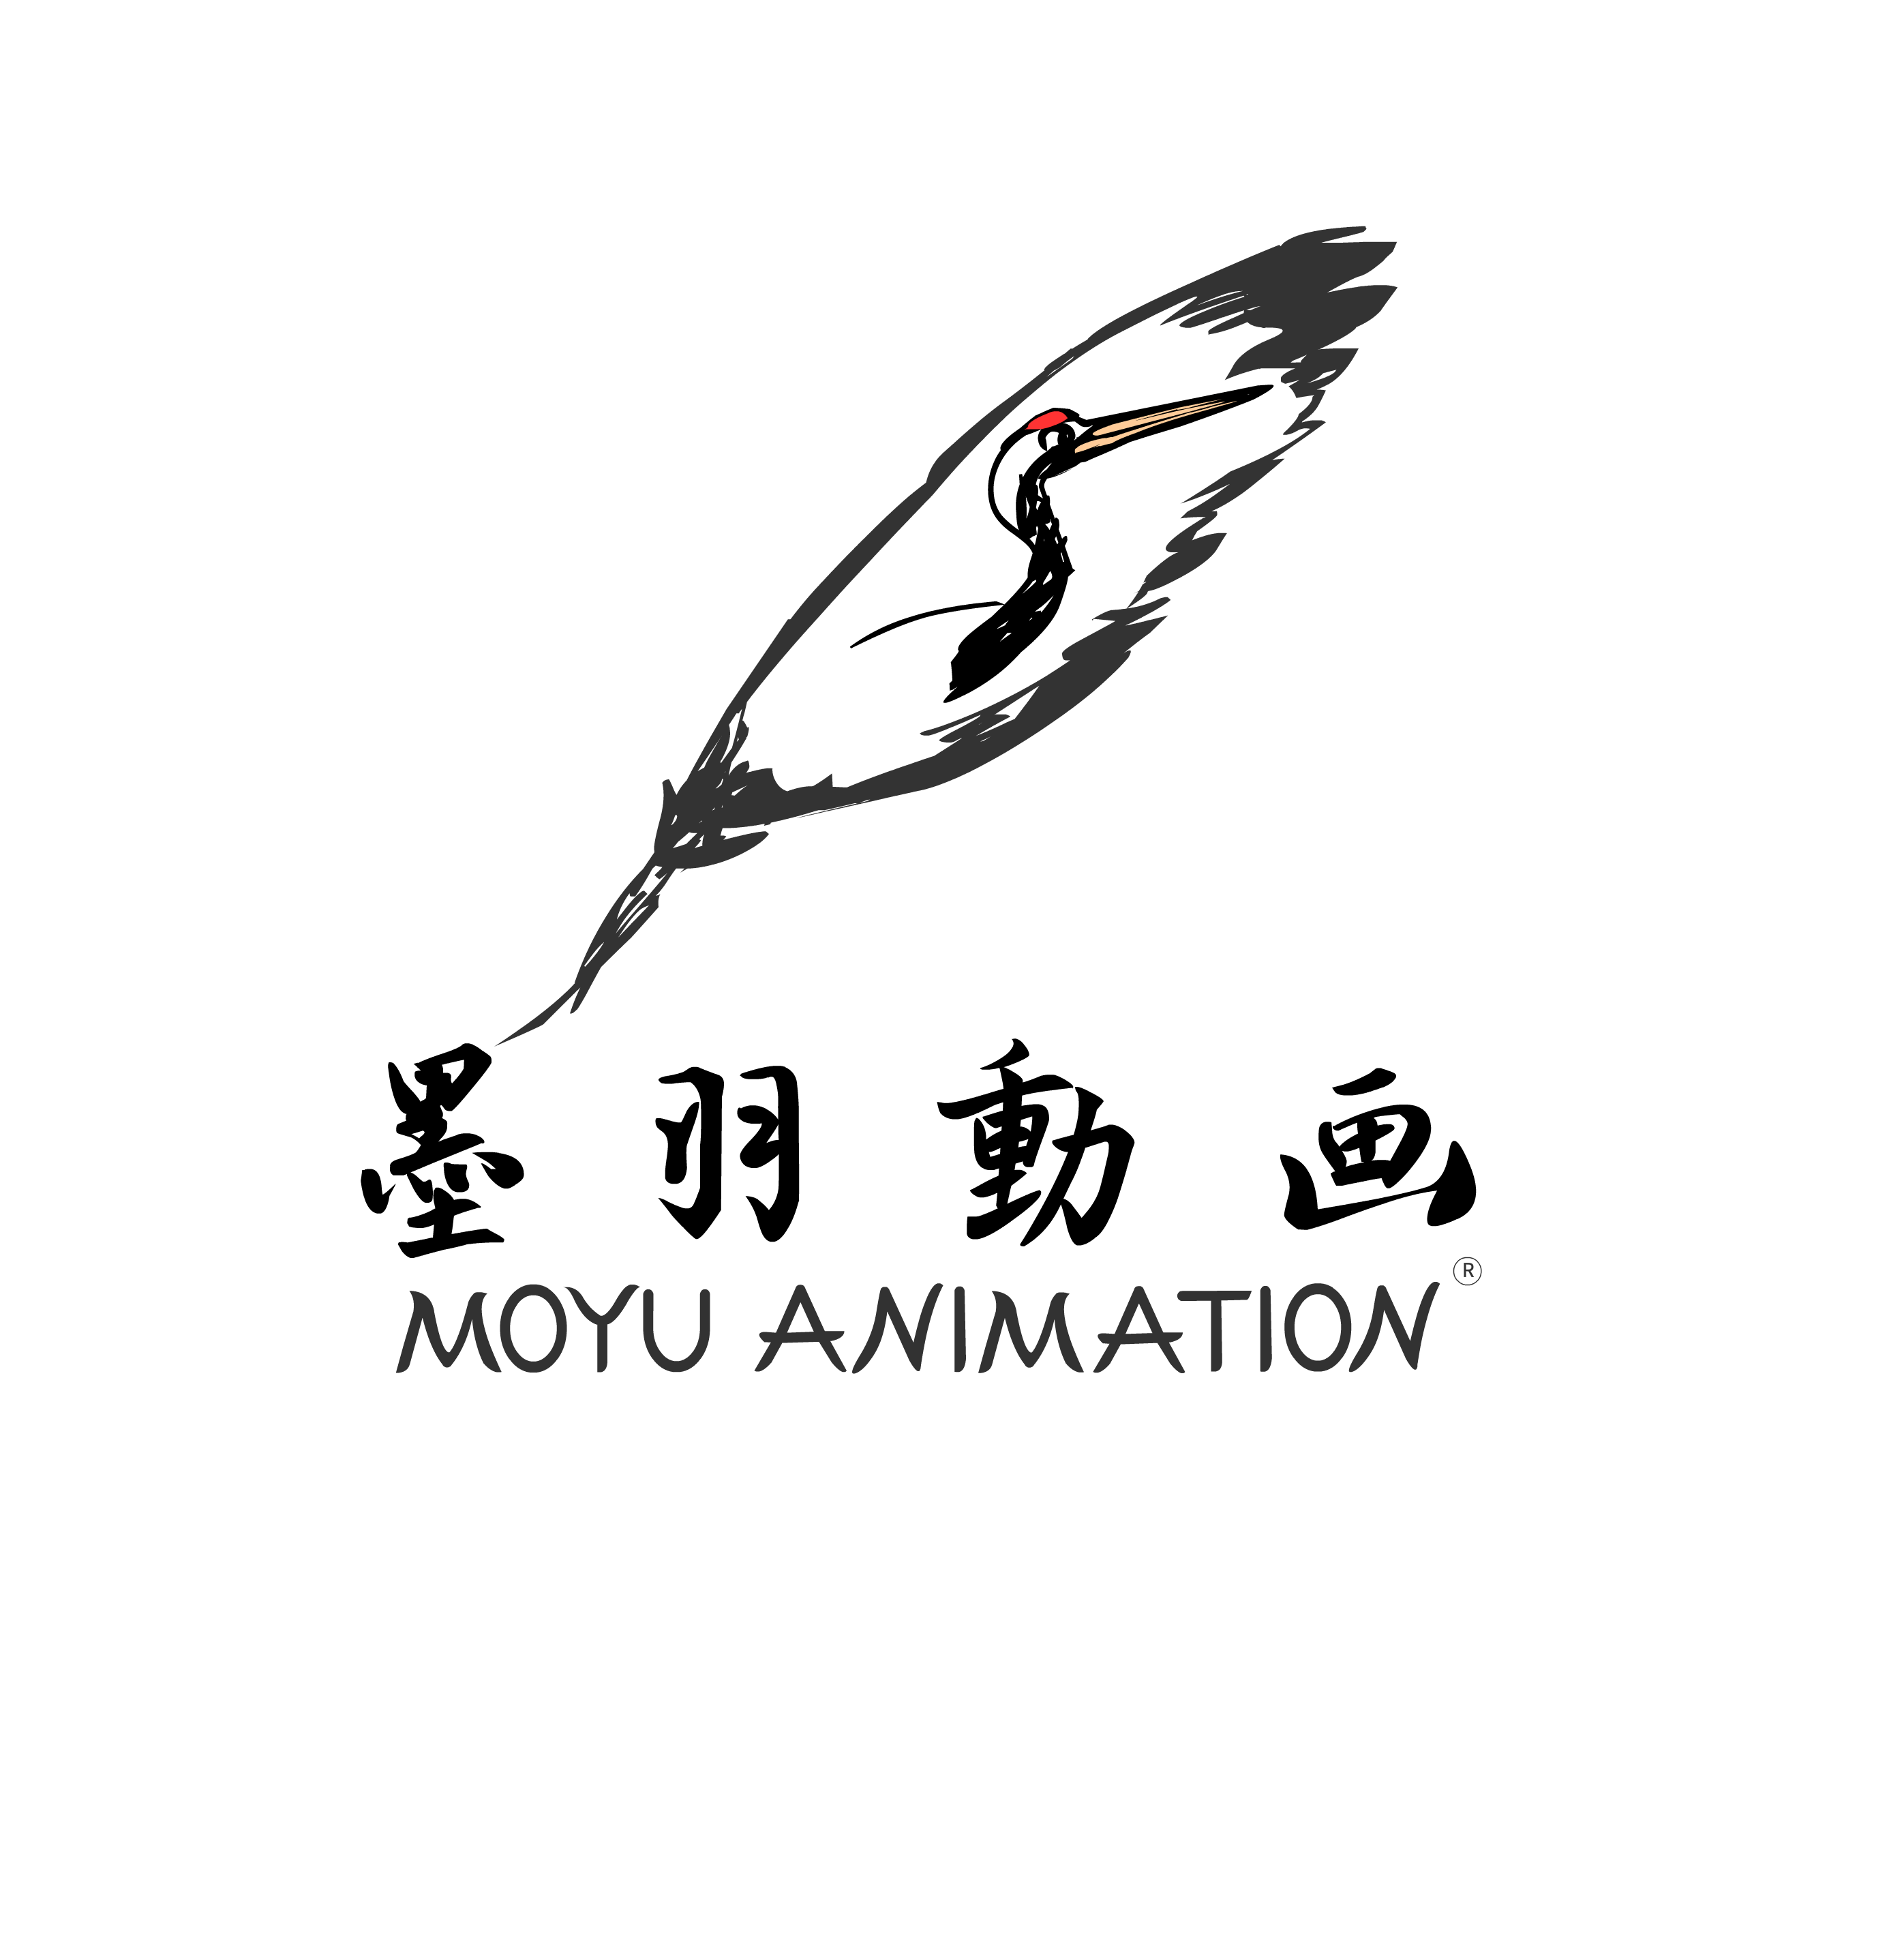 The Moyu Animation Company墨羽动画logo 中英文_20231212_17023711768737810